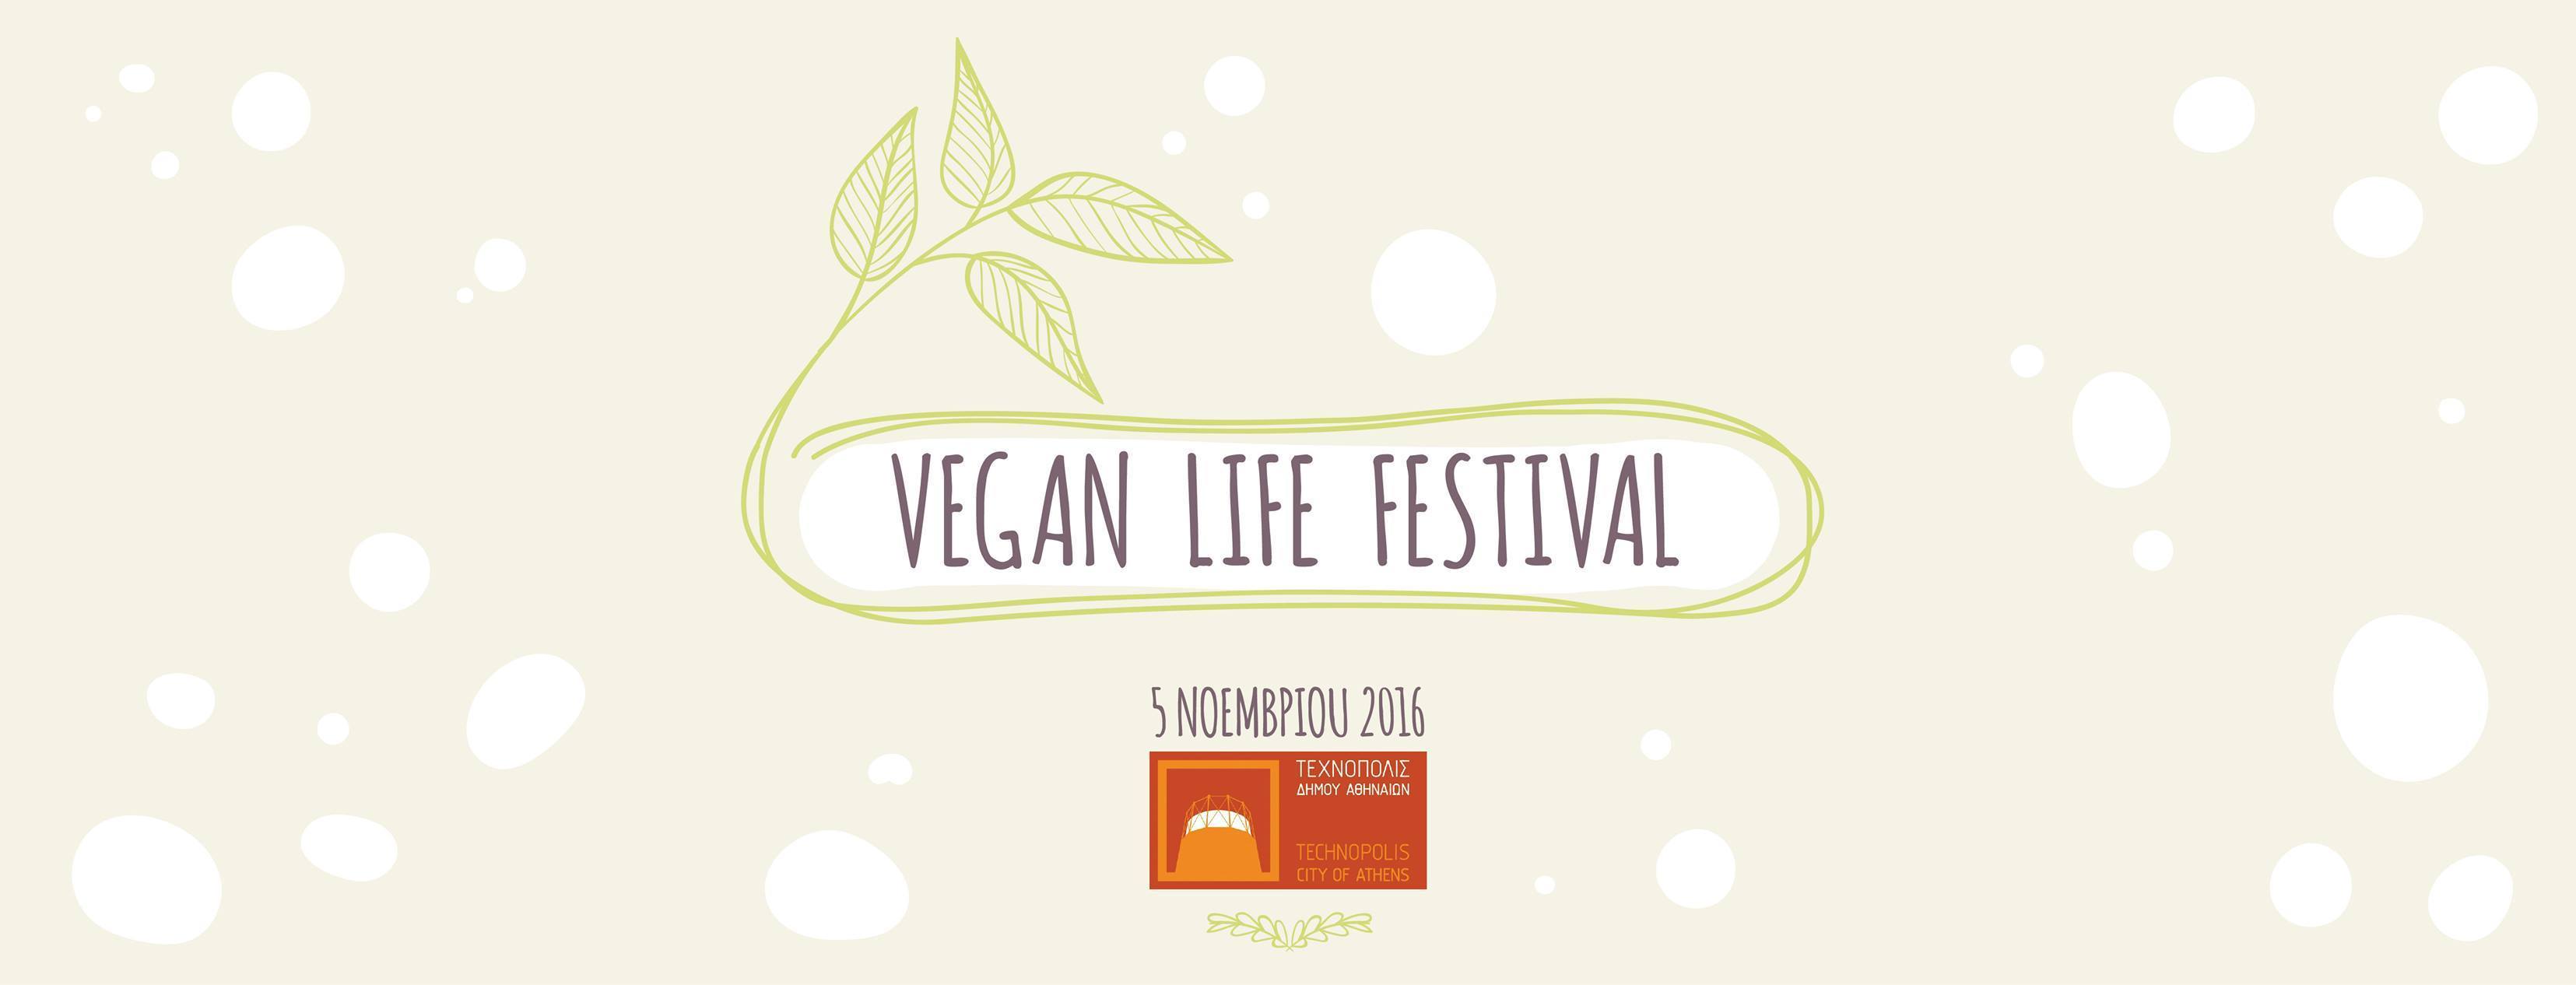 veganlifefestival2016-1